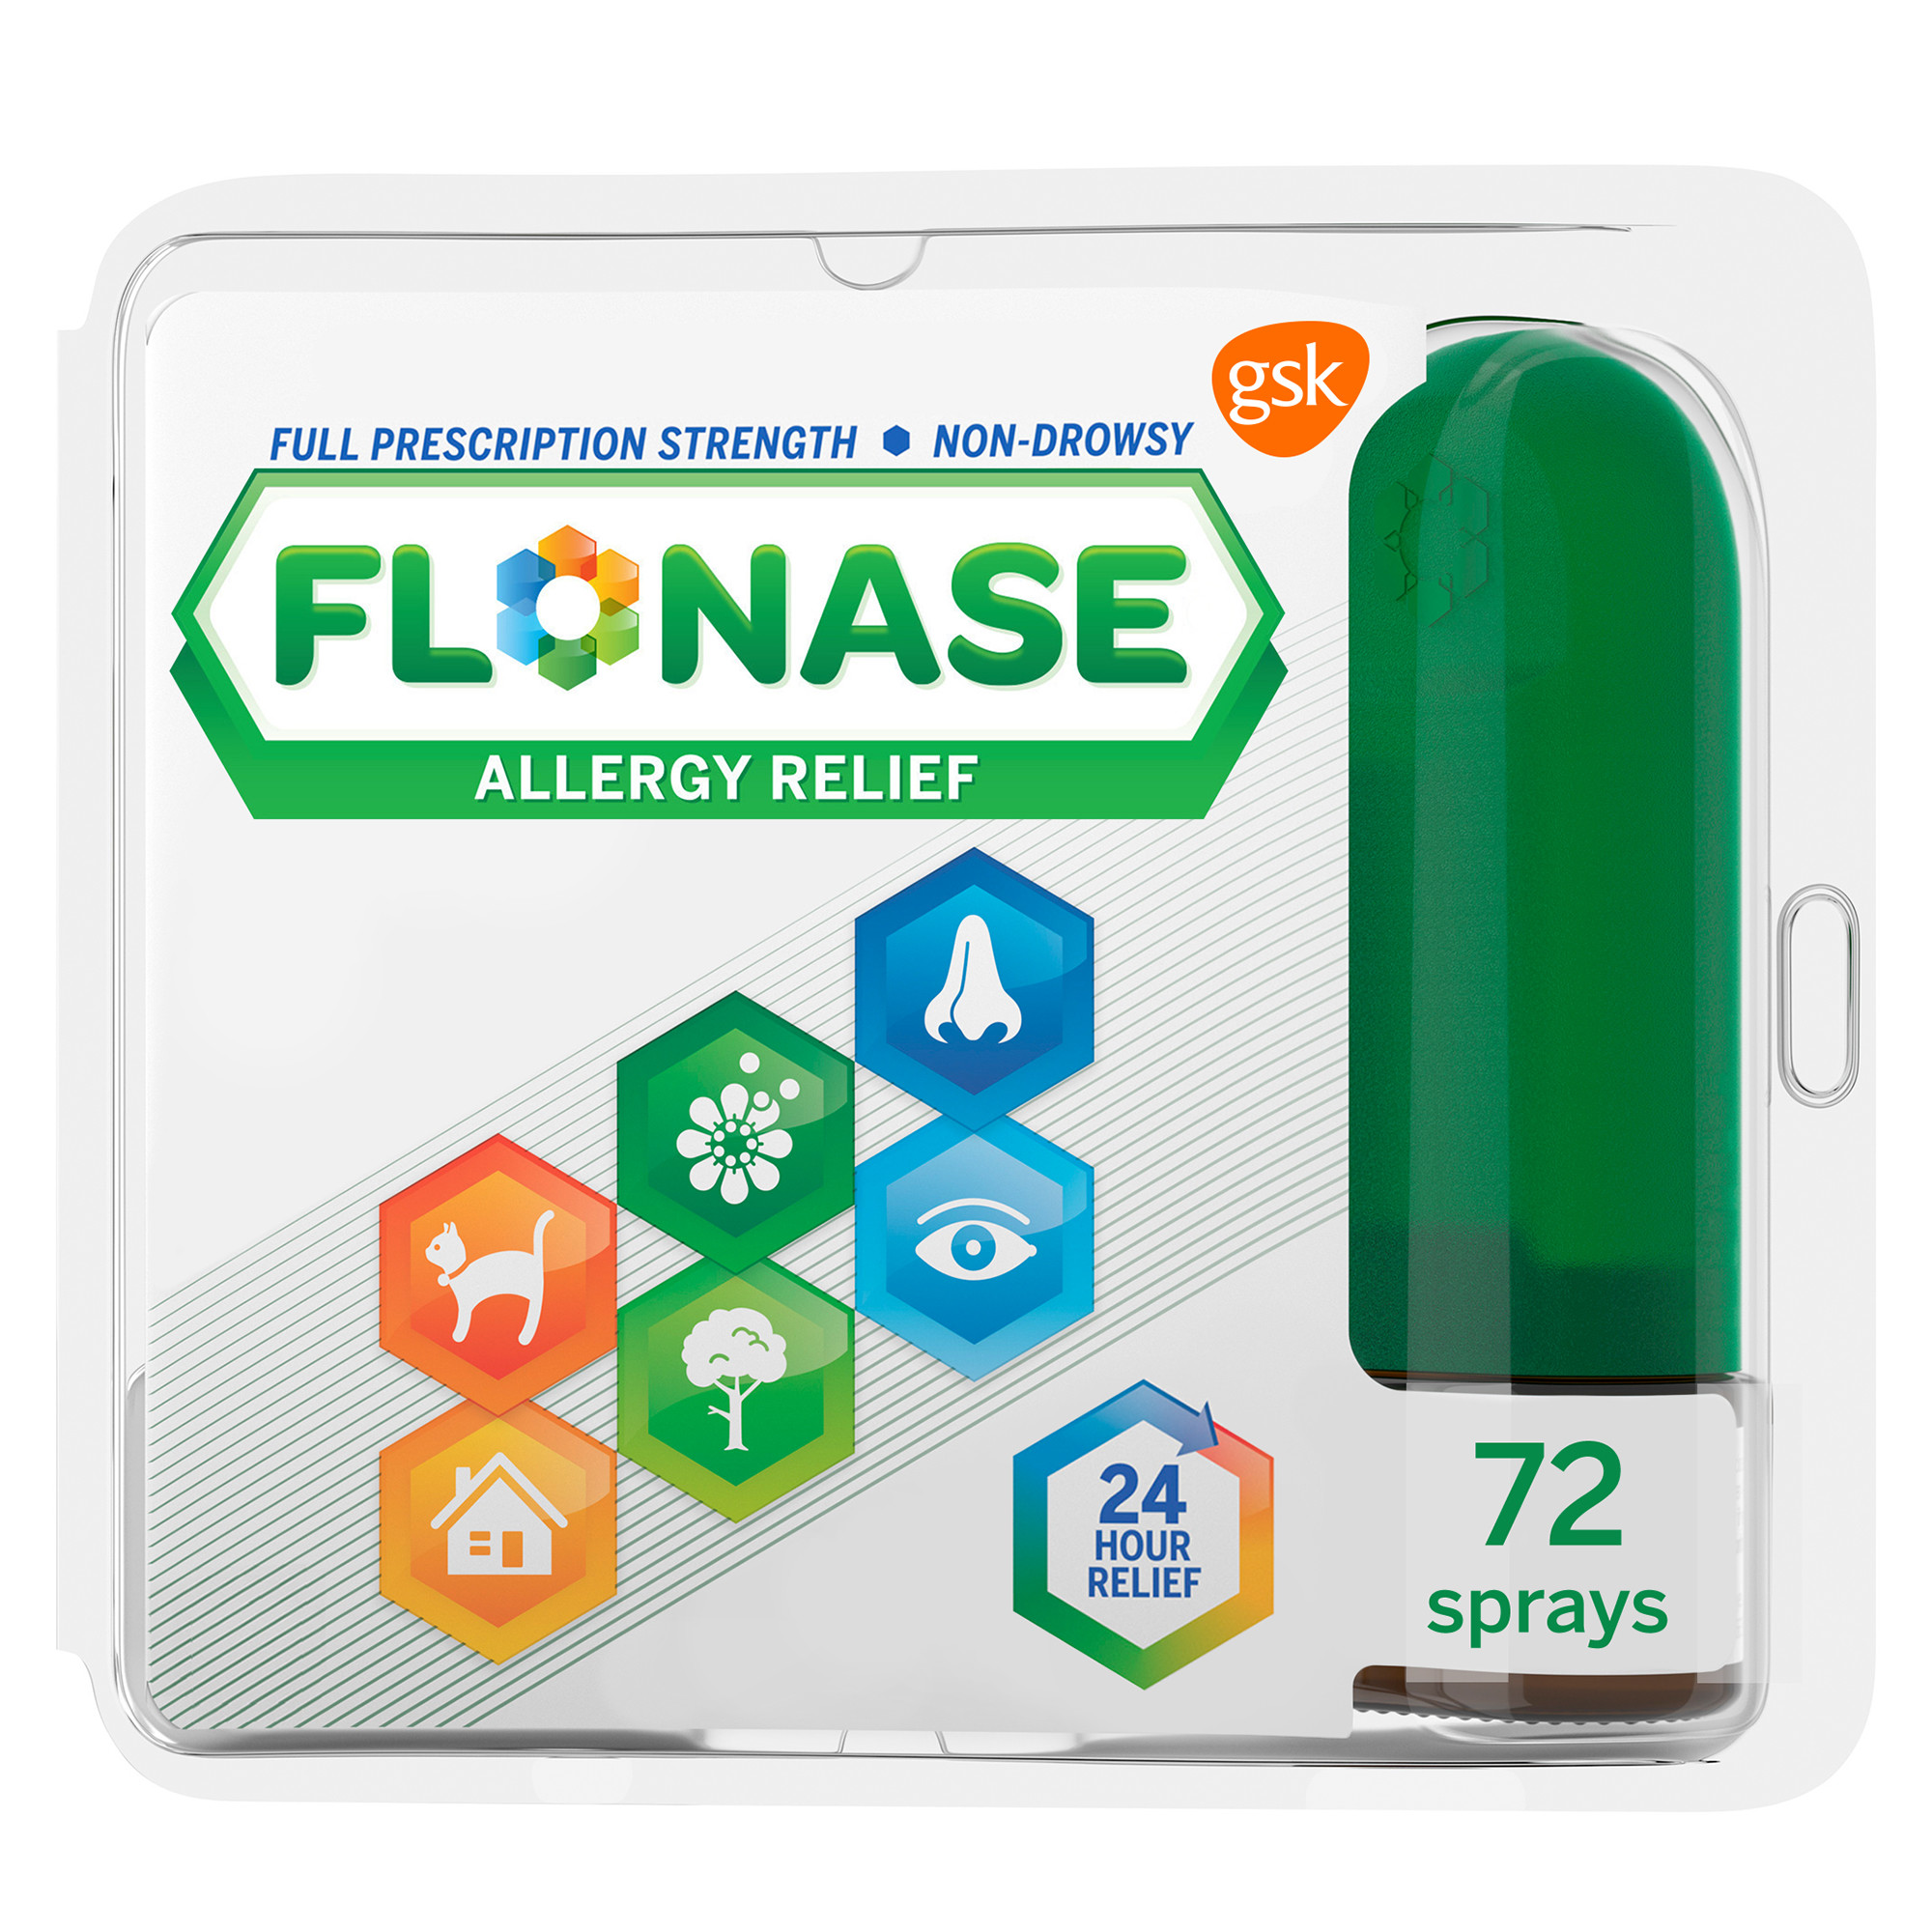 Flonase 24 Hour Non-Drowsy Decongestant Allergy Relief Medicine Nasal Spray, 72 Sprays - image 1 of 10